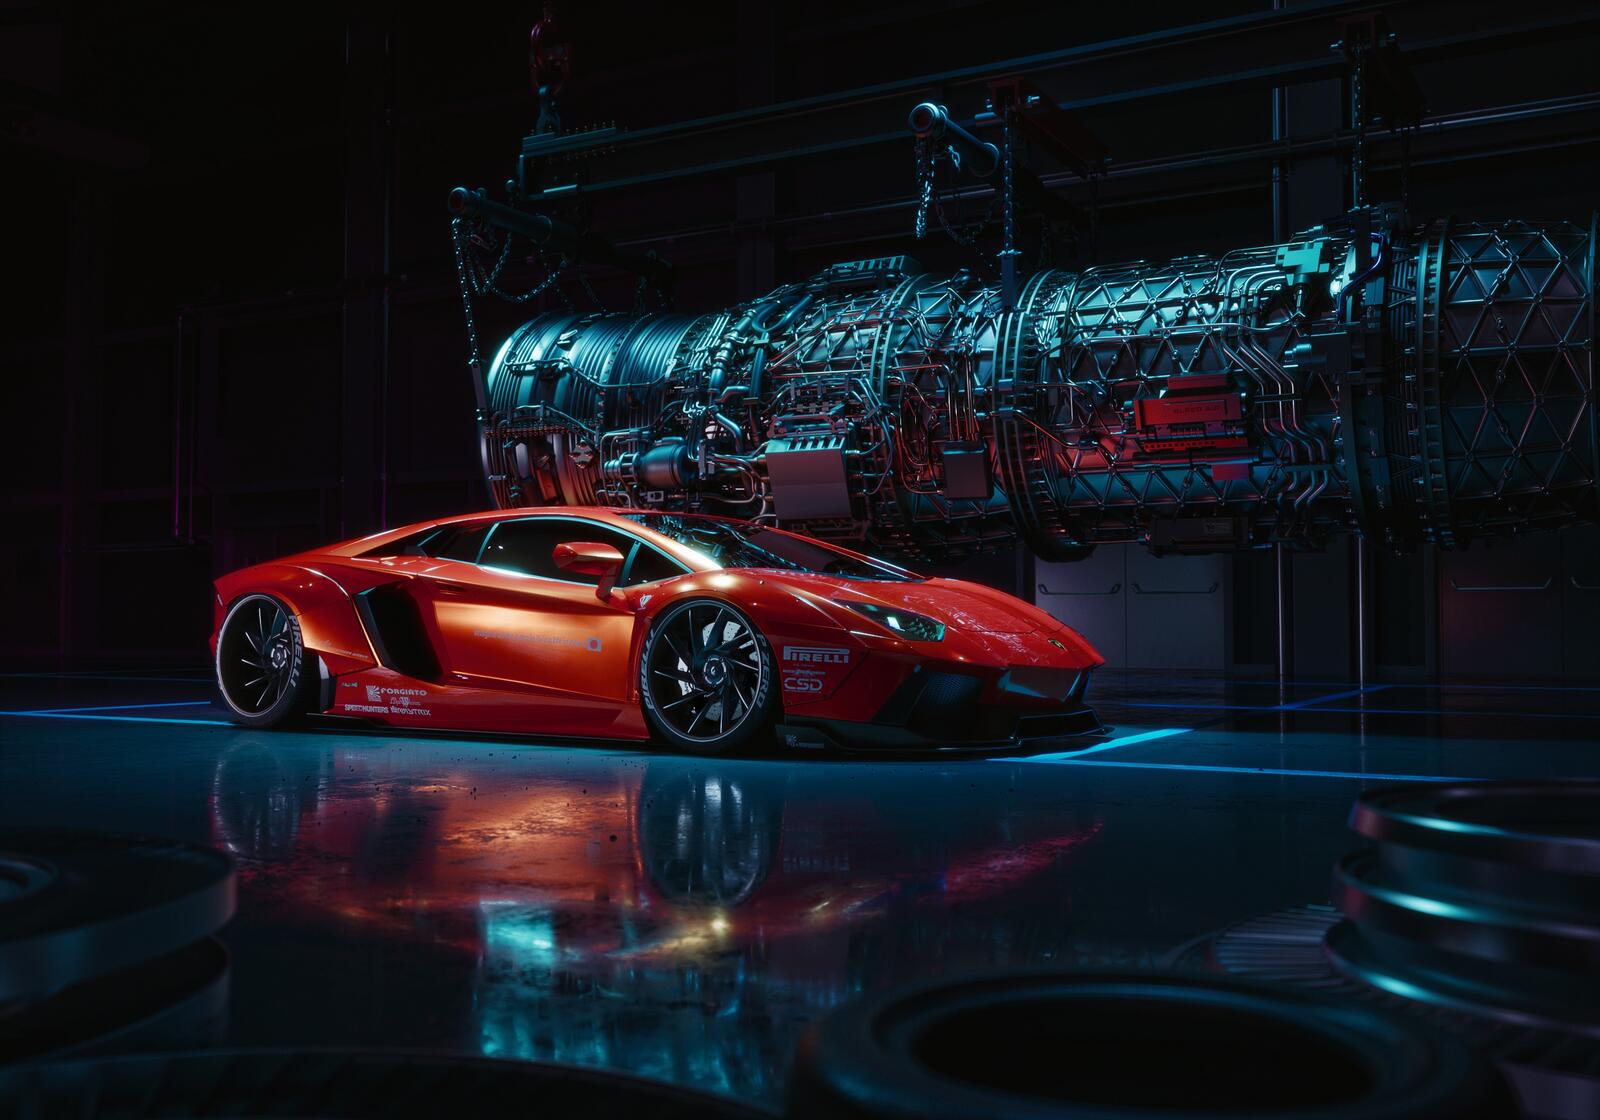 Free photo Red Lamborghini Aventador in a dark futuristic hangar